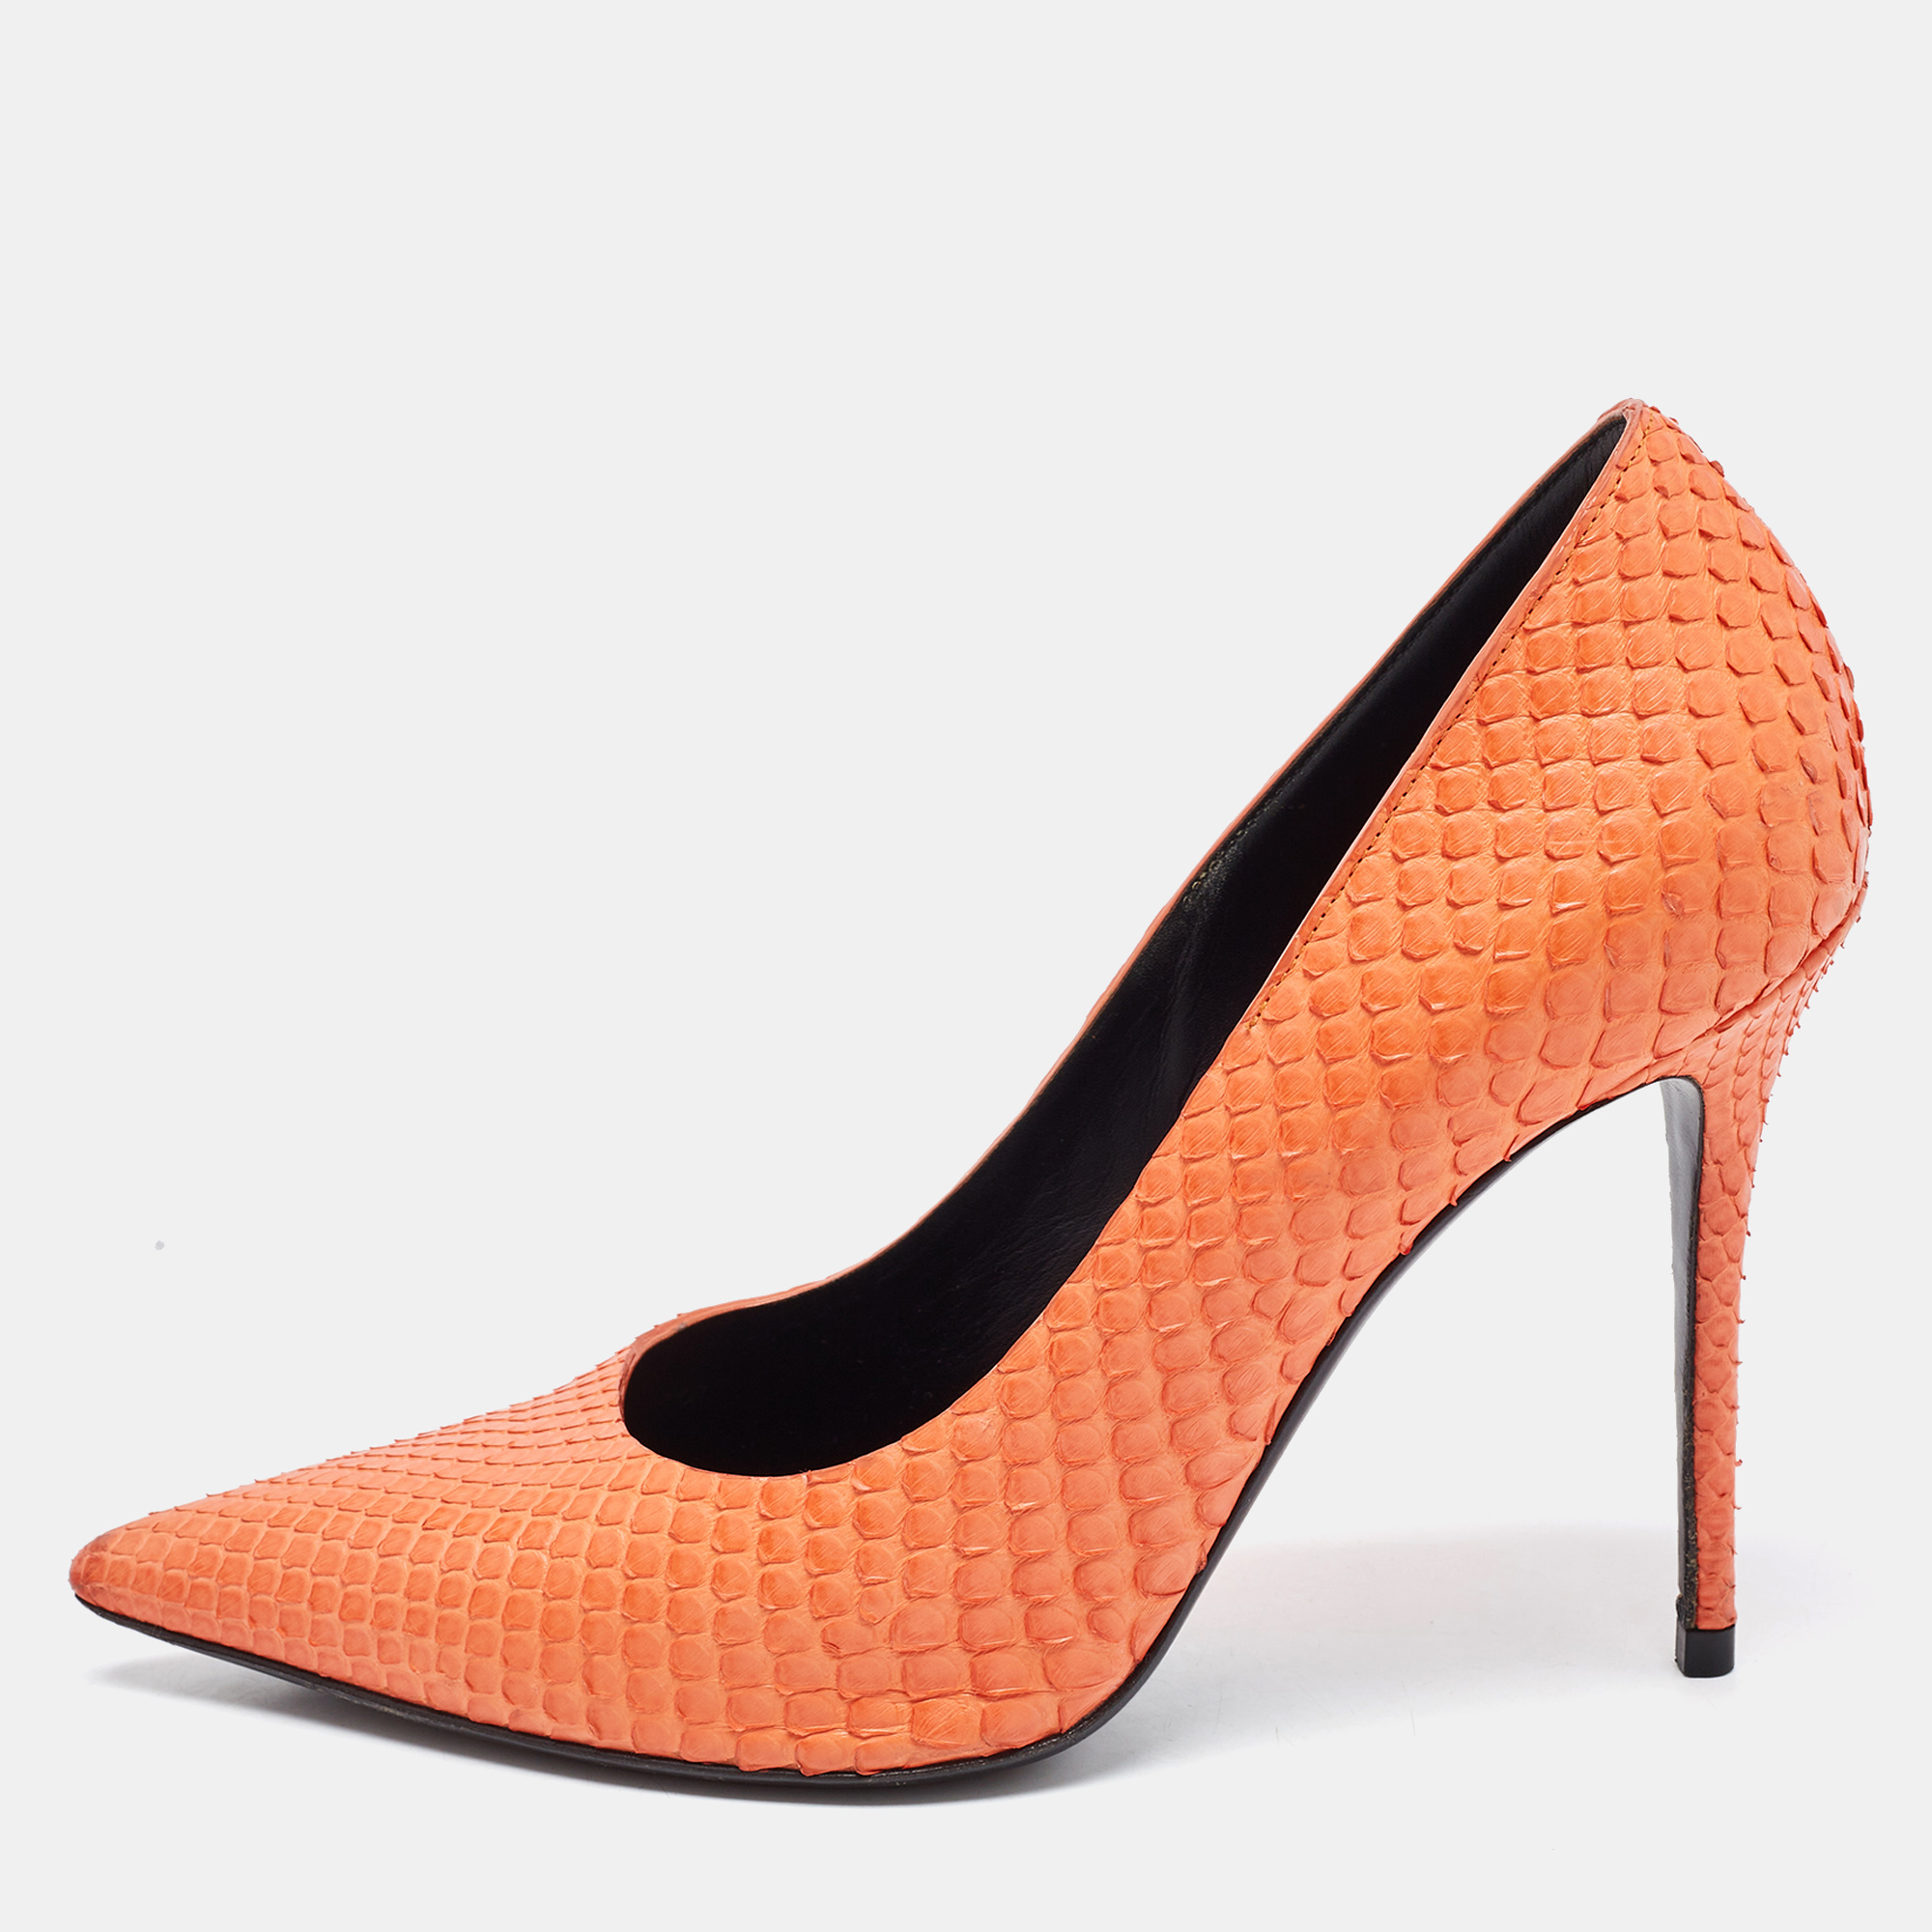 Celine Orange Python Leather Pointed Toe Pumps Size 37